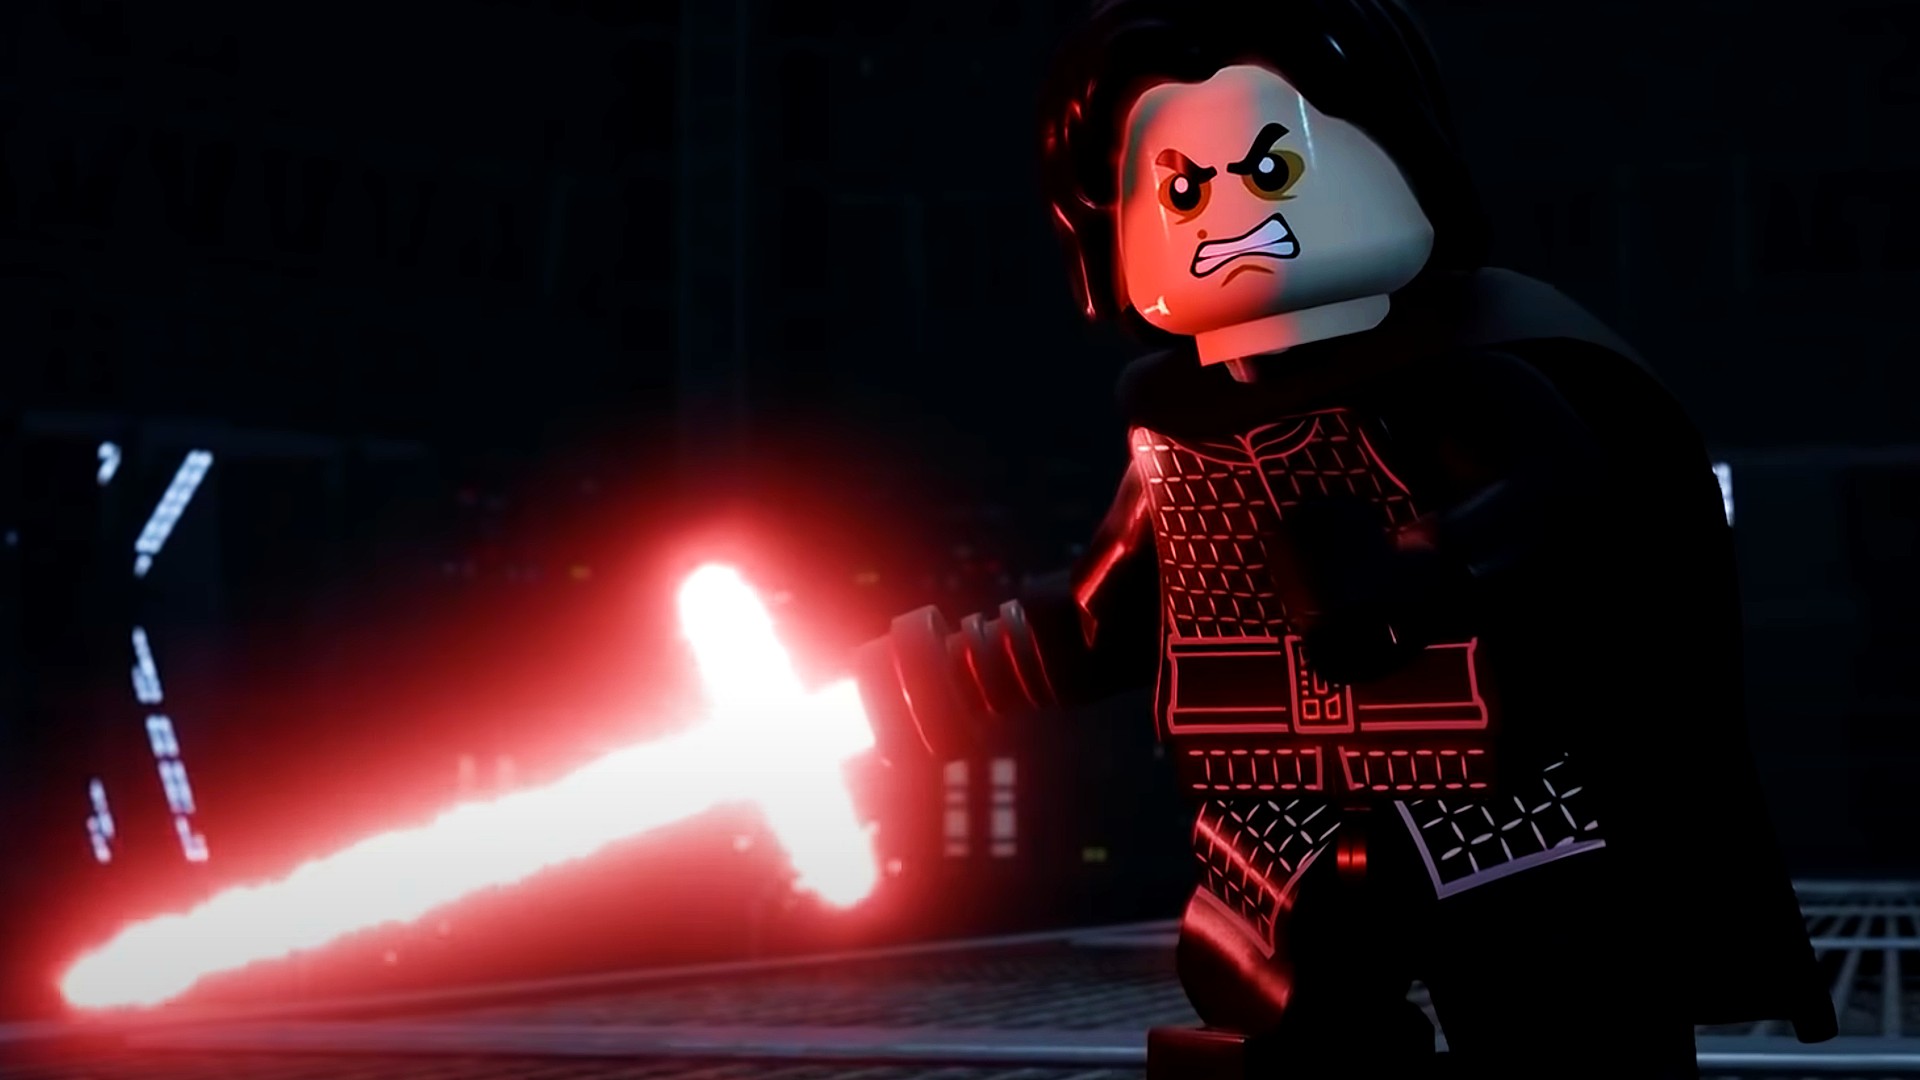 Lego Star Wars: The Skywalker Saga Cheat Codes ☆ Usage Guide